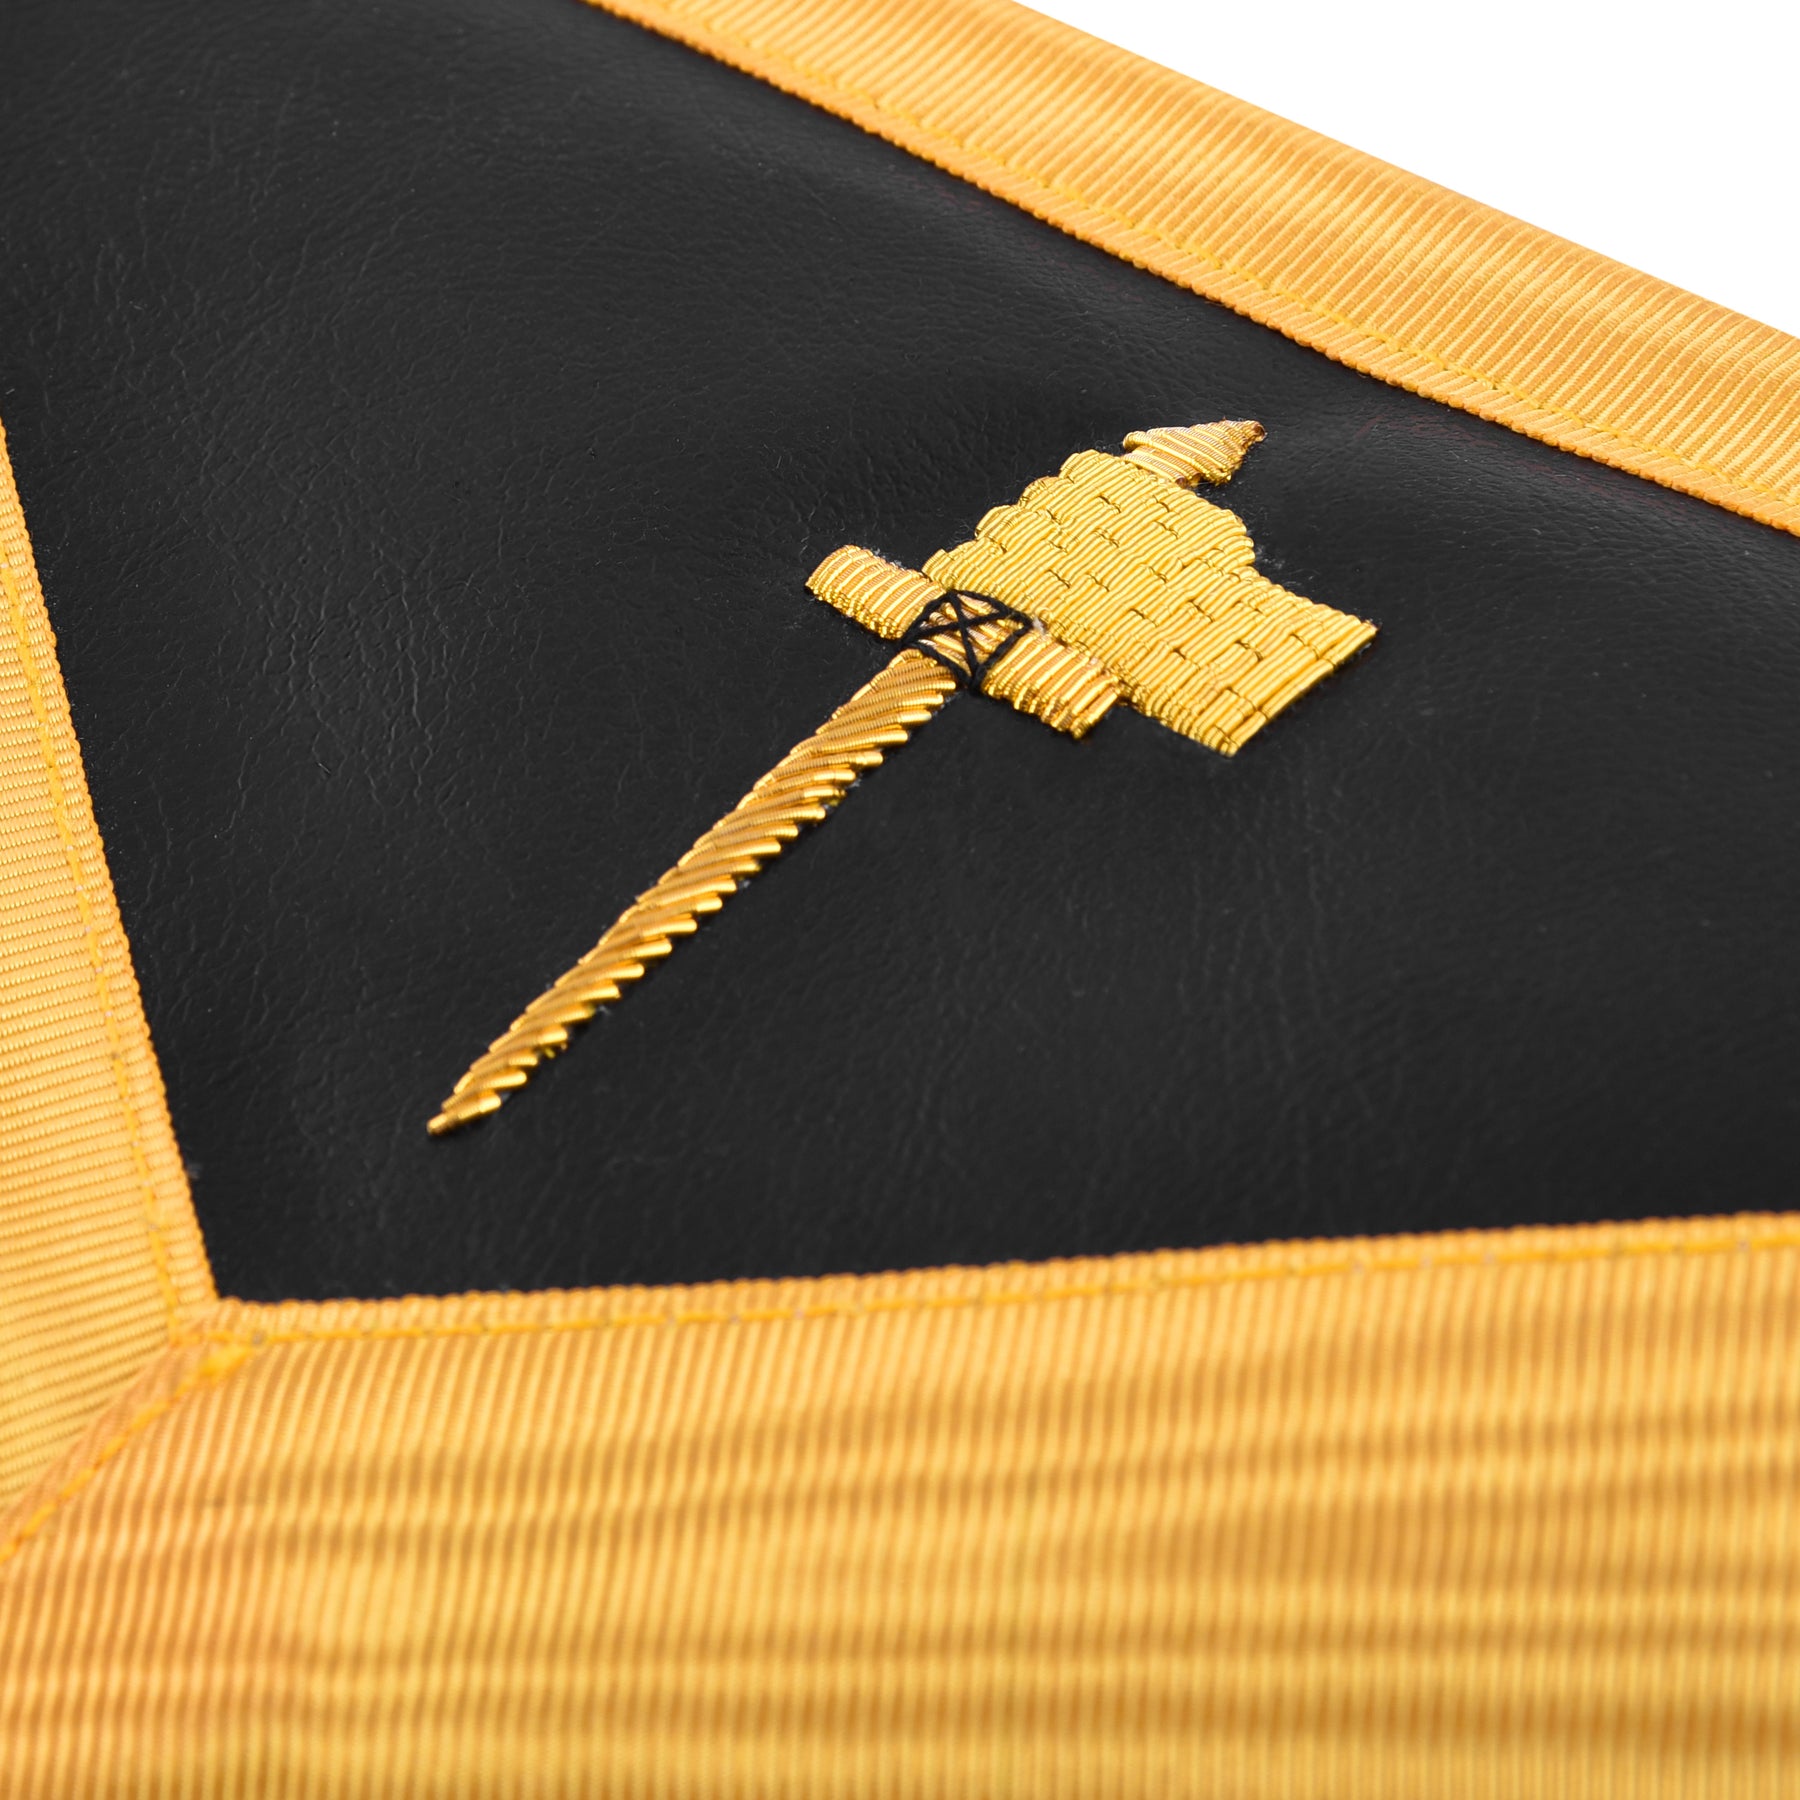 Grand Tiler of Solomon Allied Masonic Degrees Apron - Hand Embroidery Gold Bullion - Bricks Masons